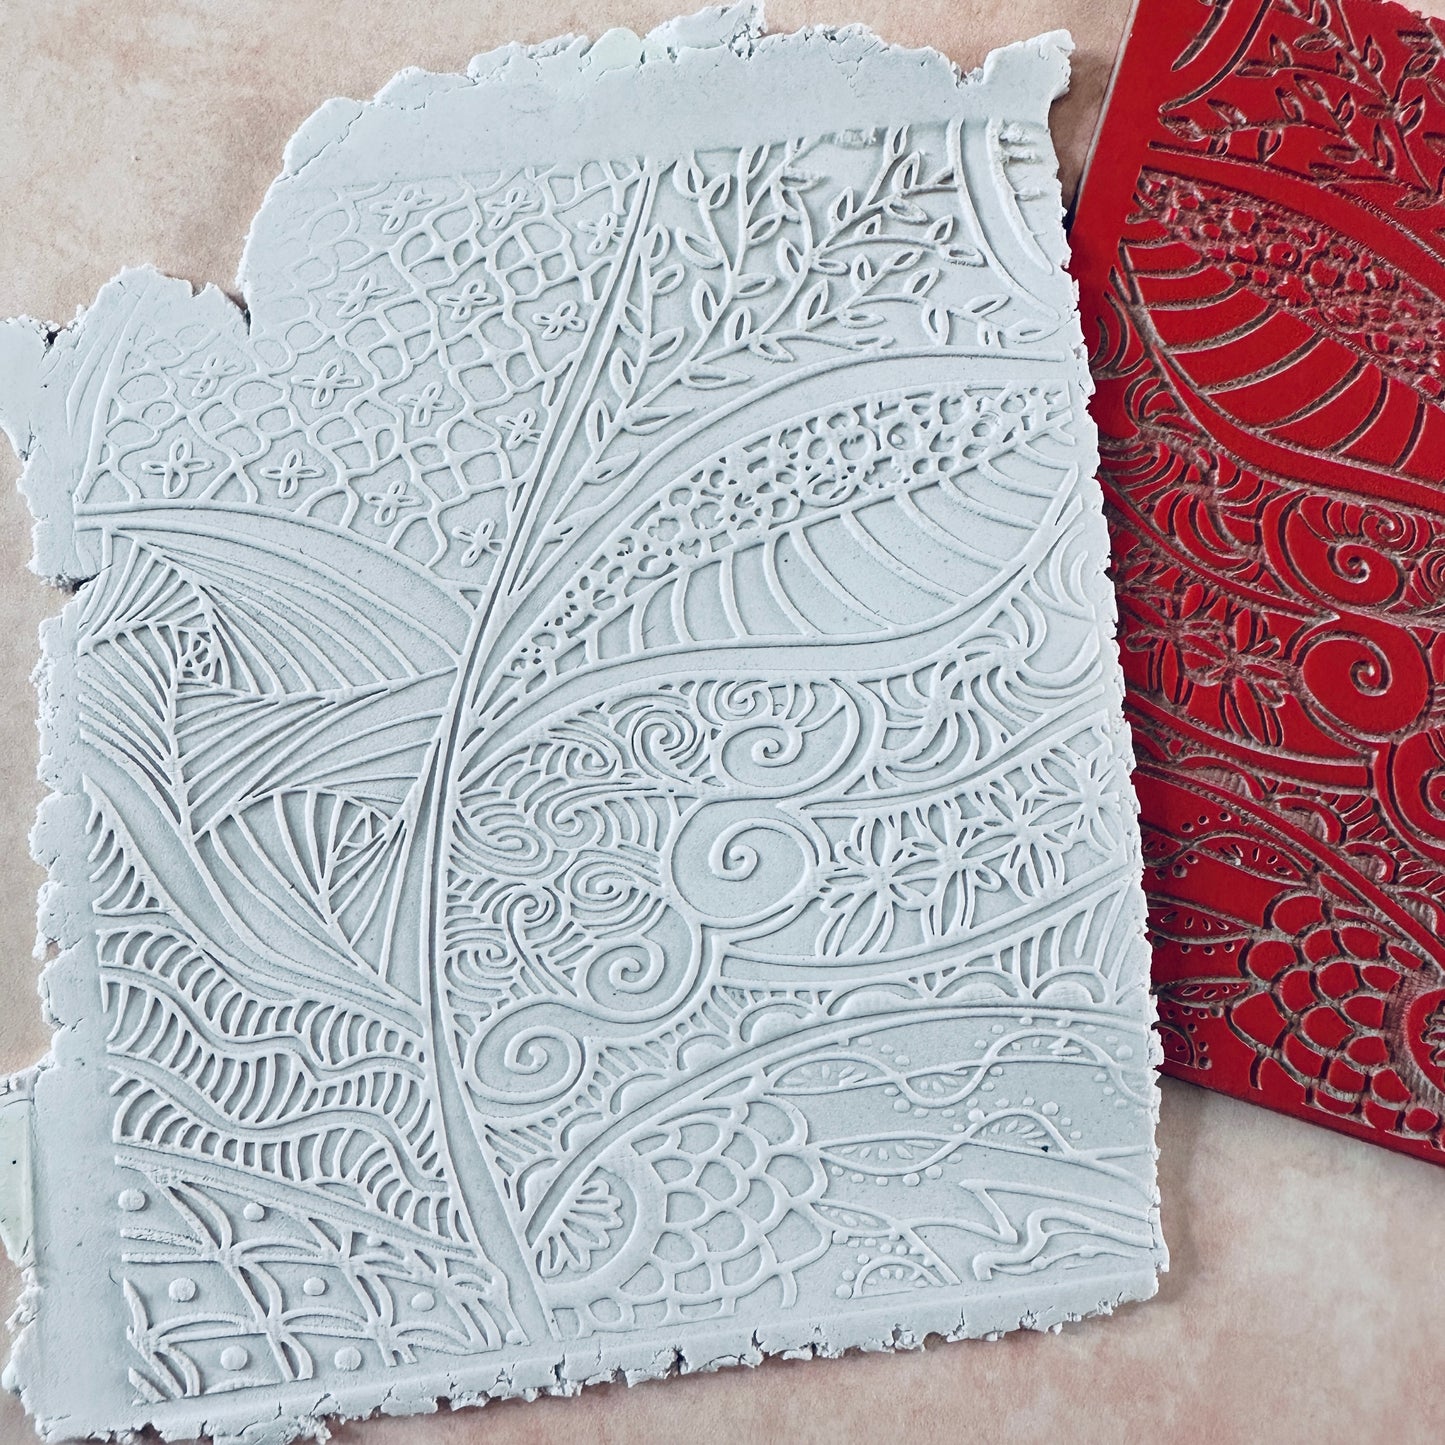 Zen Garden Texture Mat rubber Stamp for polymer clay paper Gelli plate and resin ZIA zentangle inspired